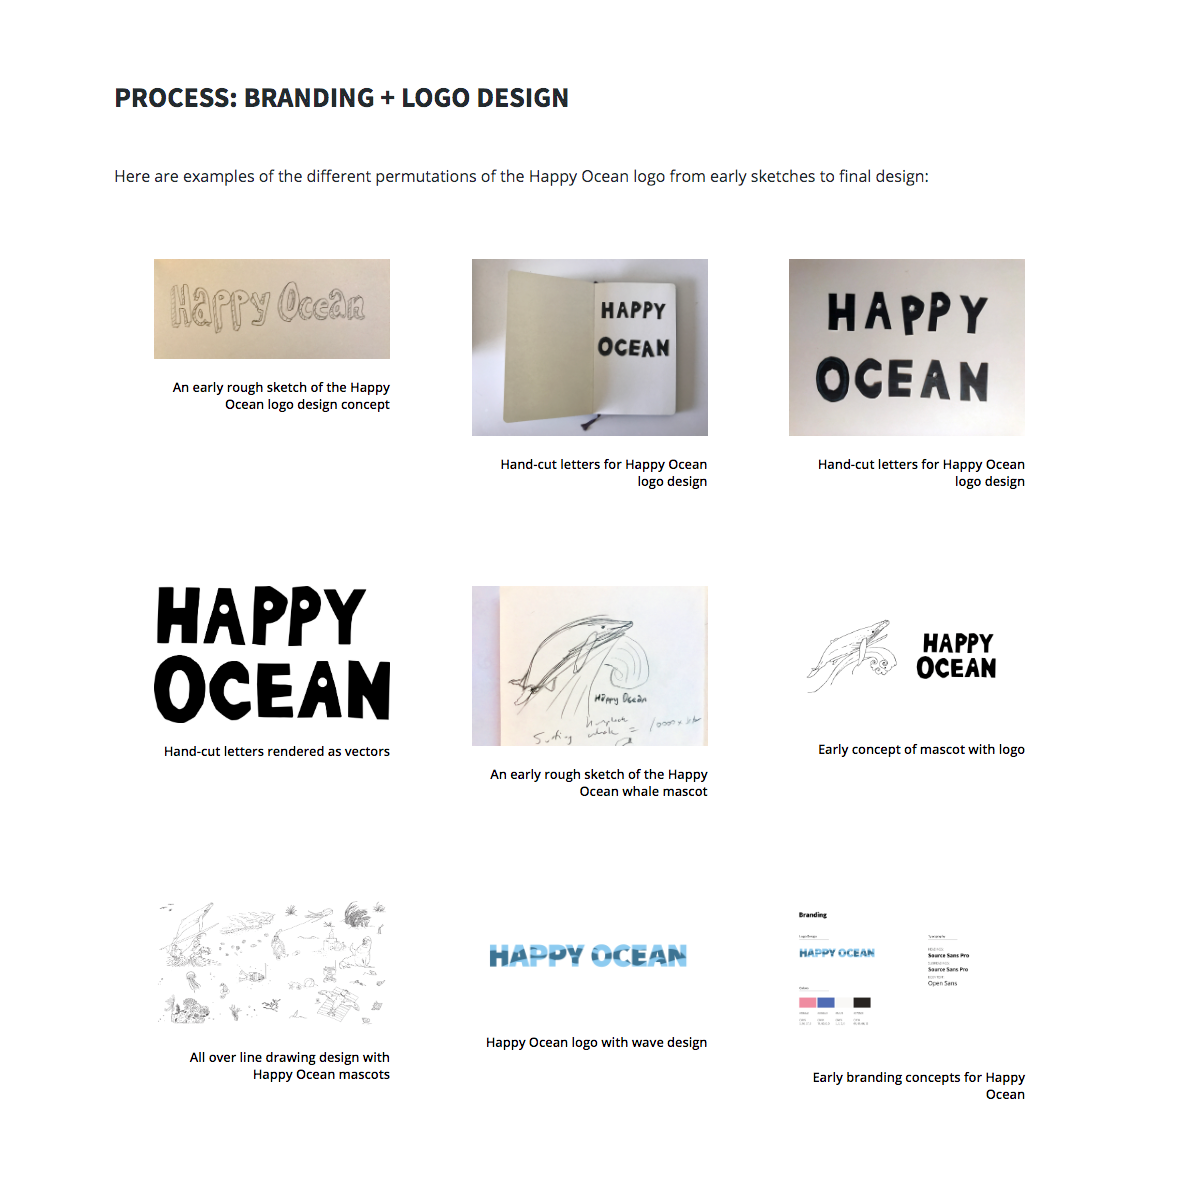 Happy Ocean process for branding and logo design.